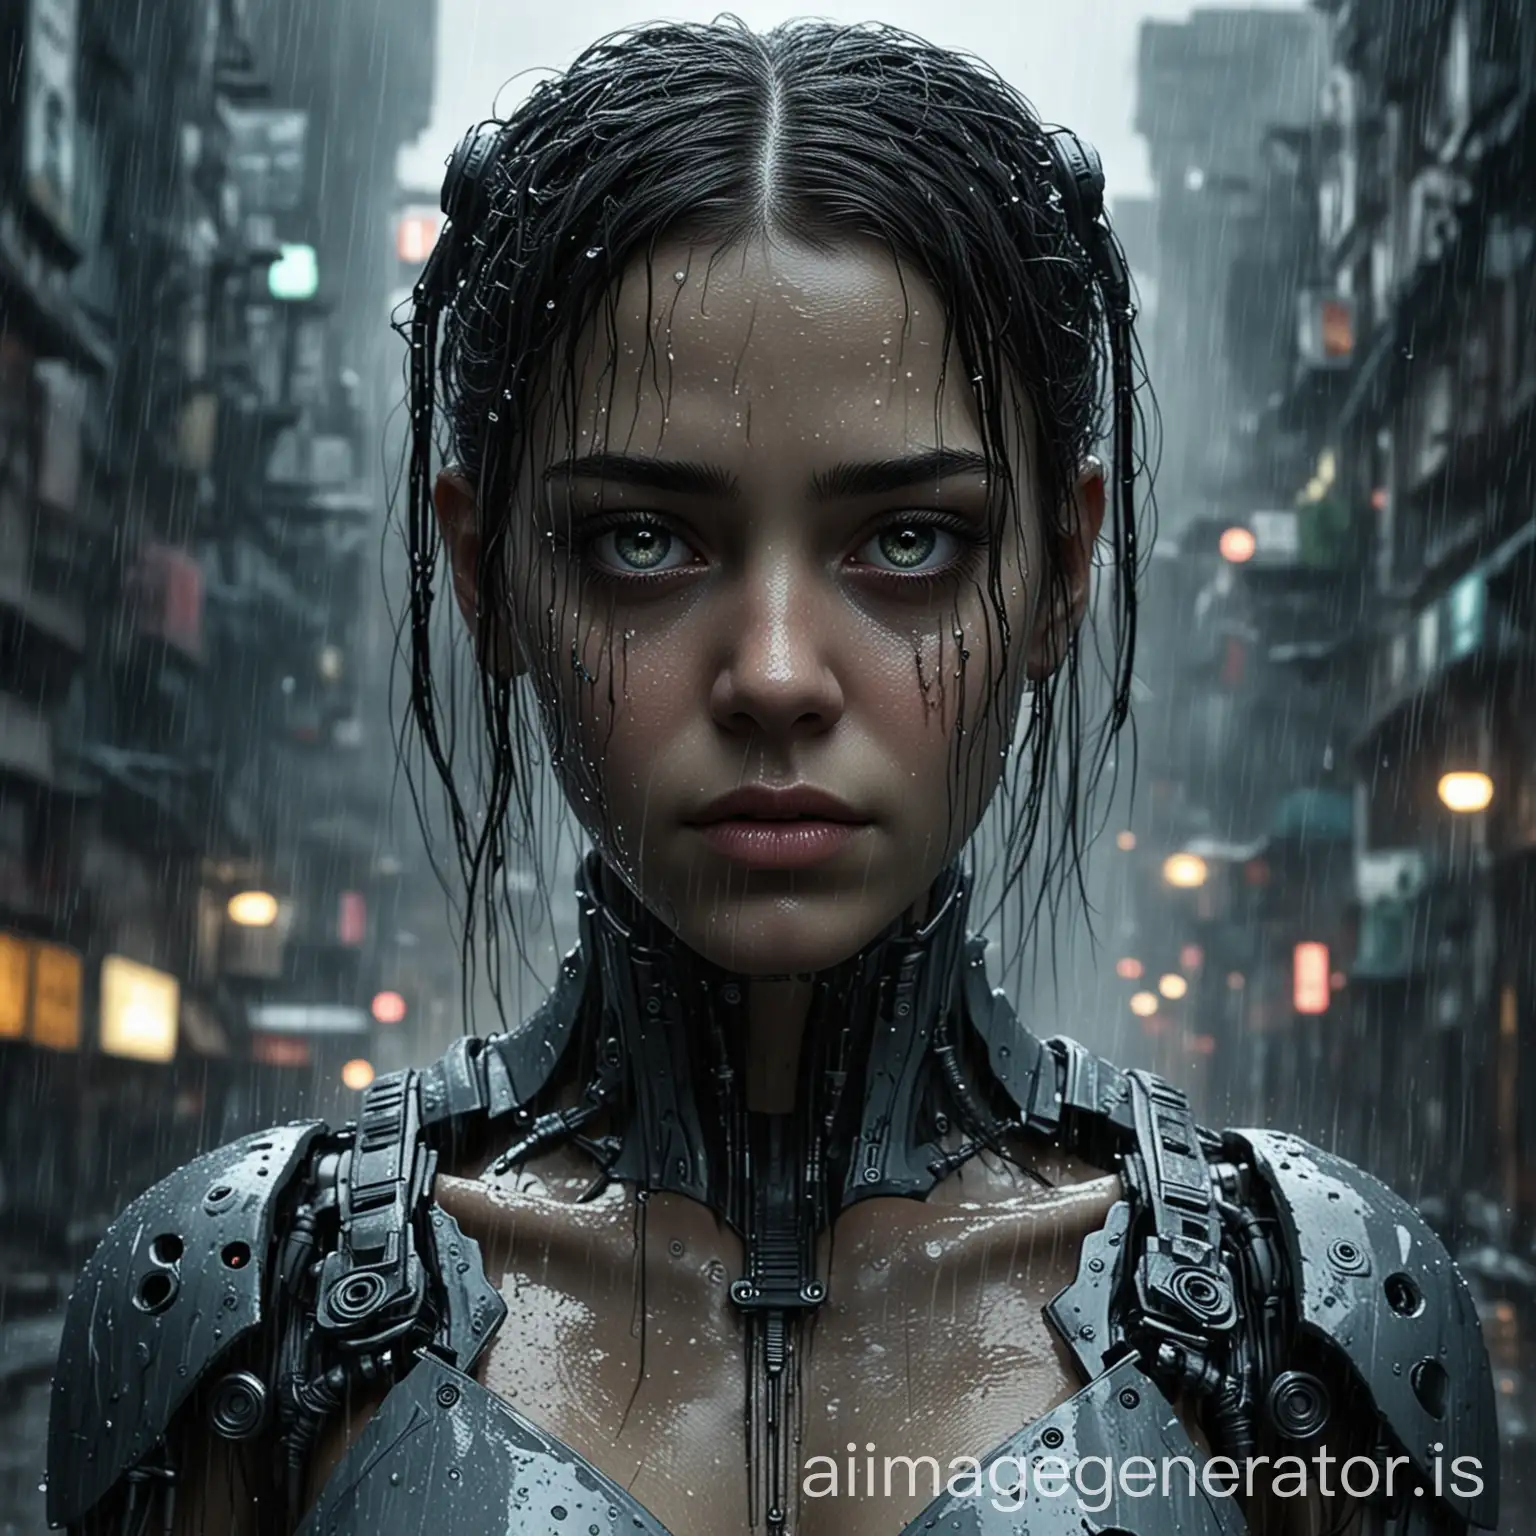 cyborg girl realistic pretty sad movie poster dark city rain